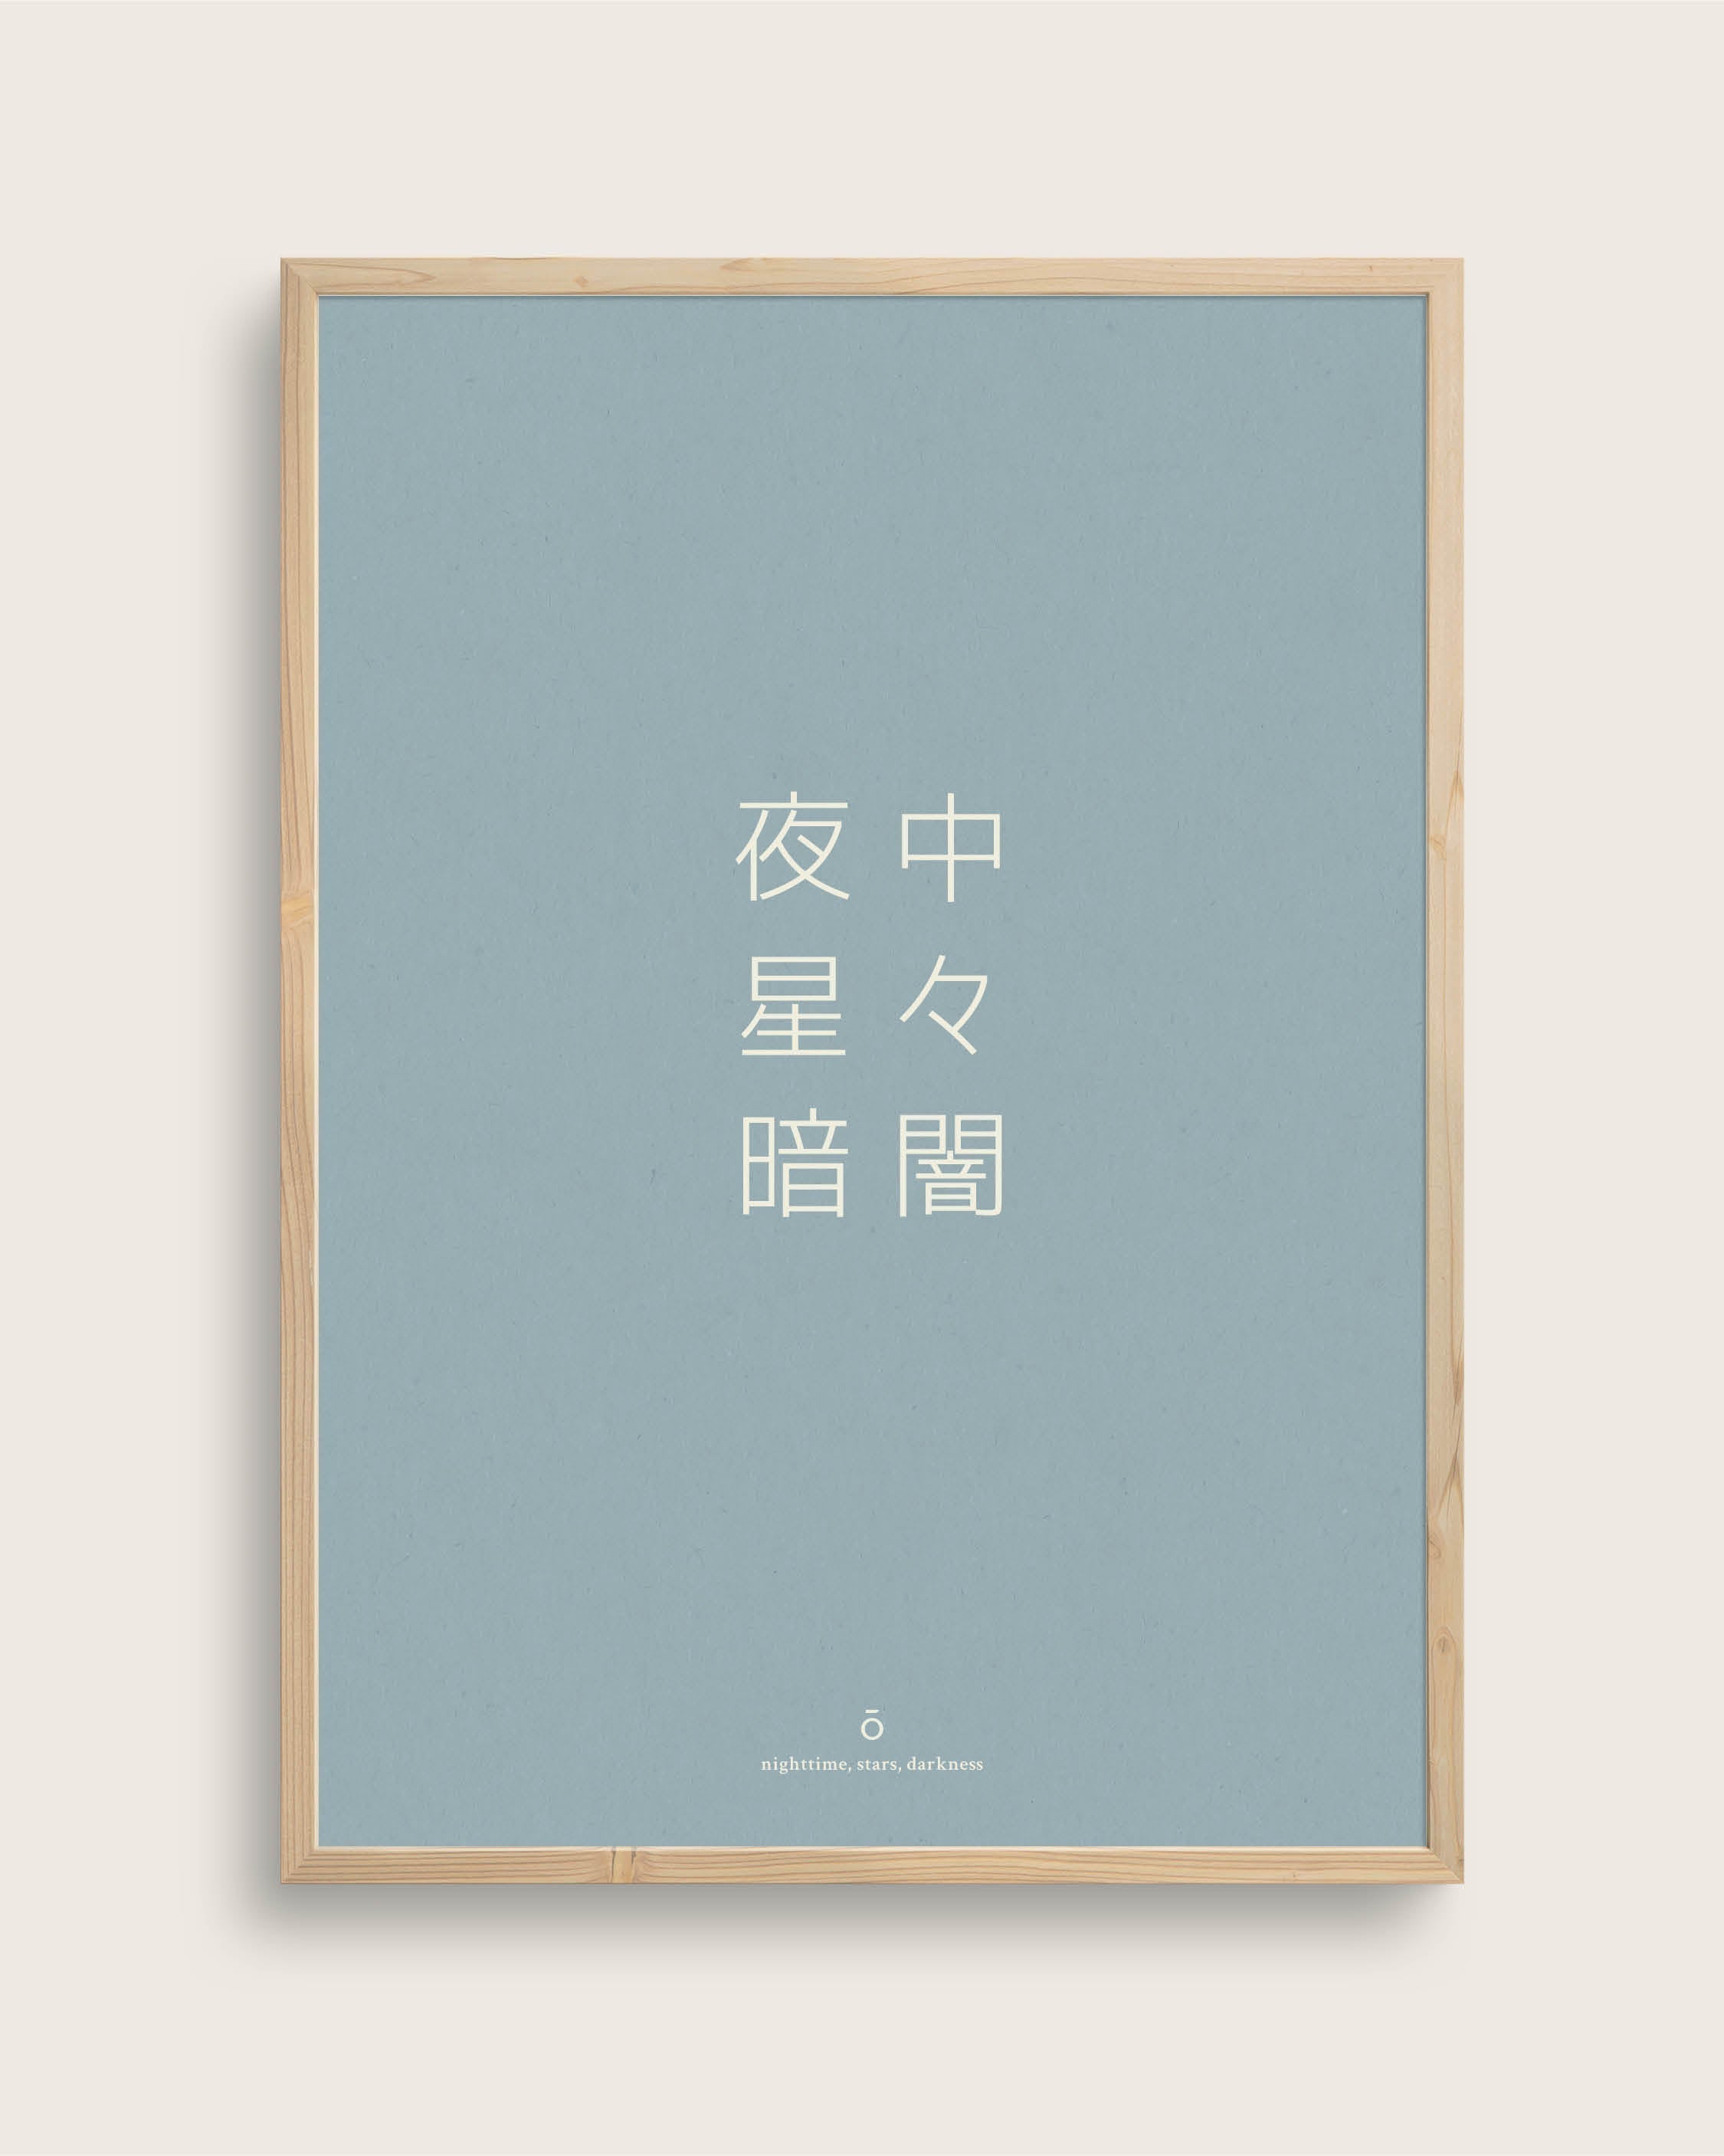 Se Kanji (nat) Størrelse 100x140 (akustikprint inkl. egetræsramme) | Seramikku hos Seramikku.dk